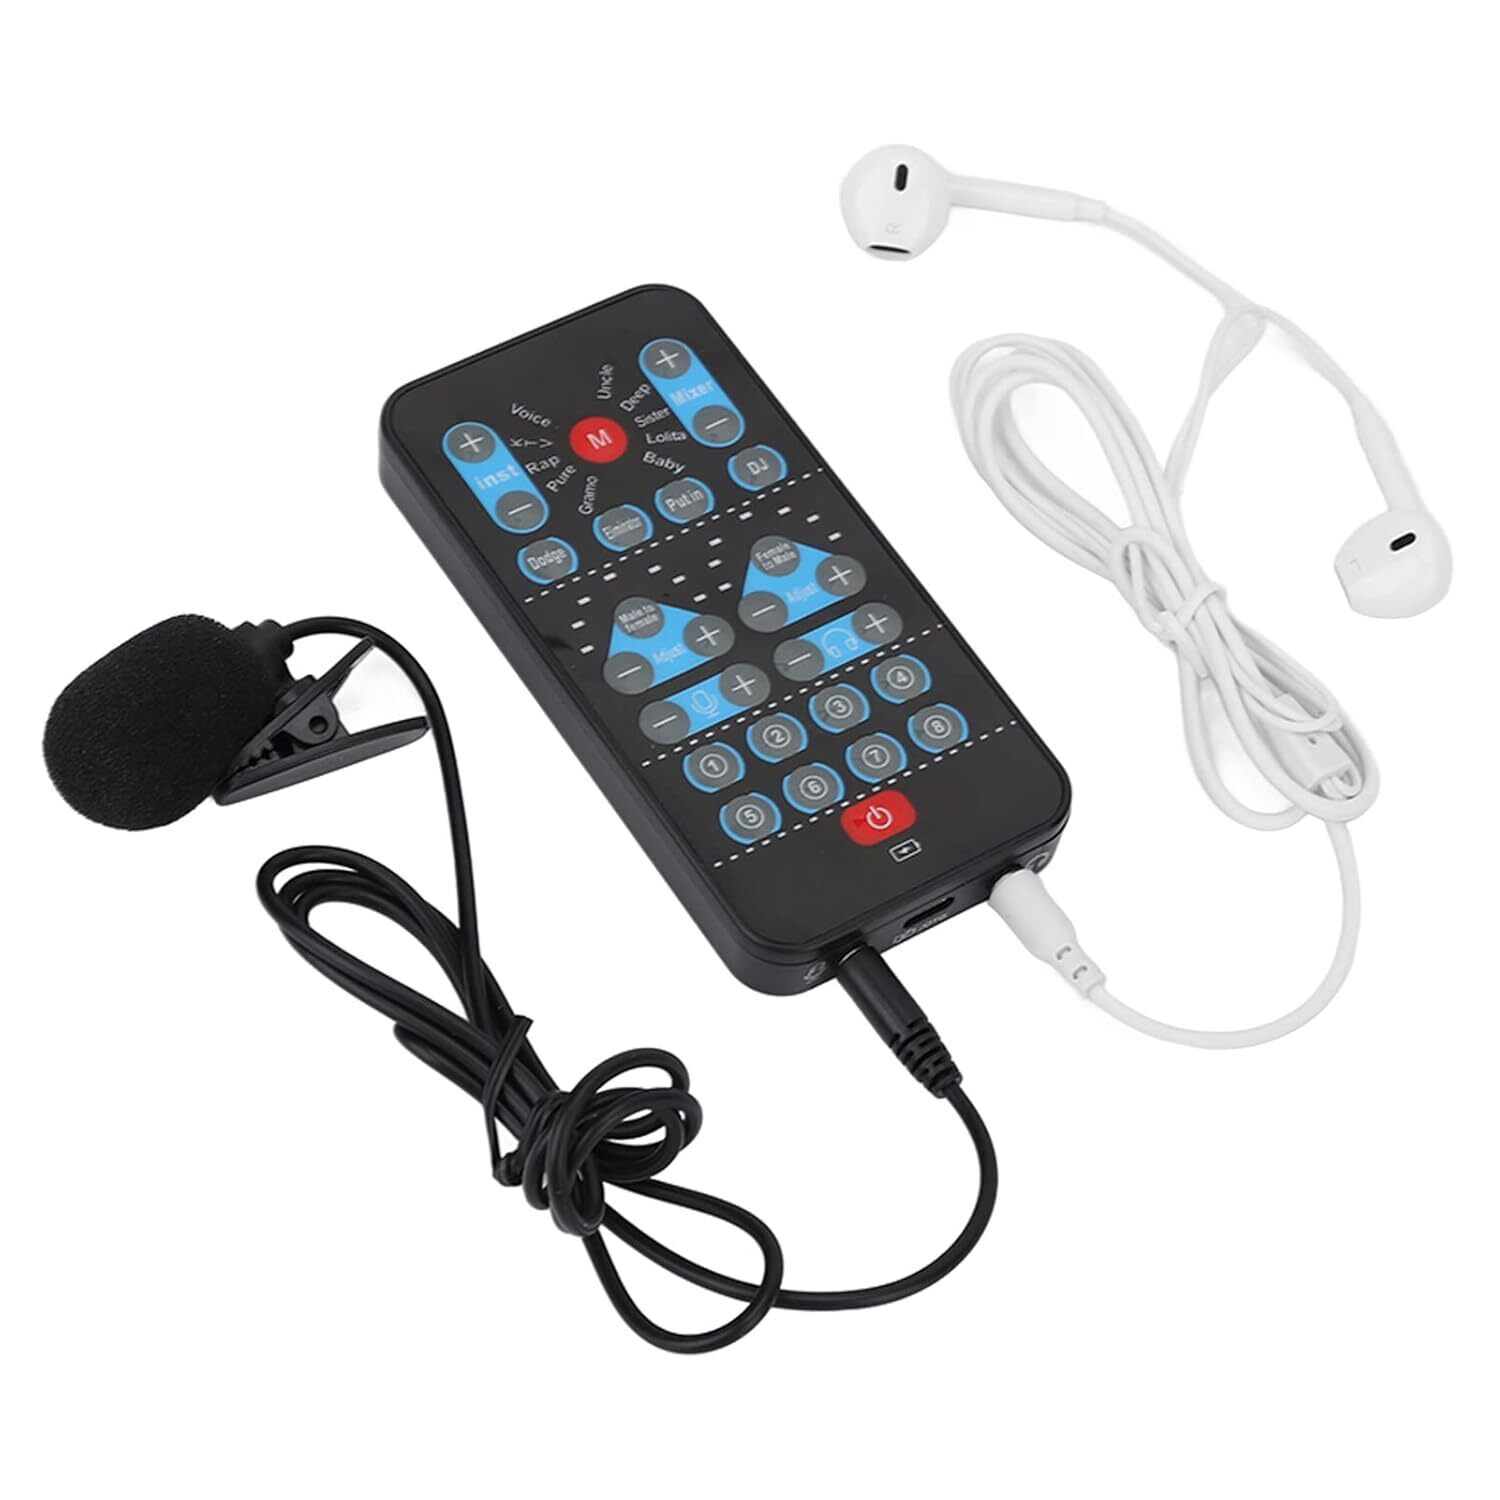 Portable Live Sound Card,8 Sound Effects External Mini Voice Changer,Support M